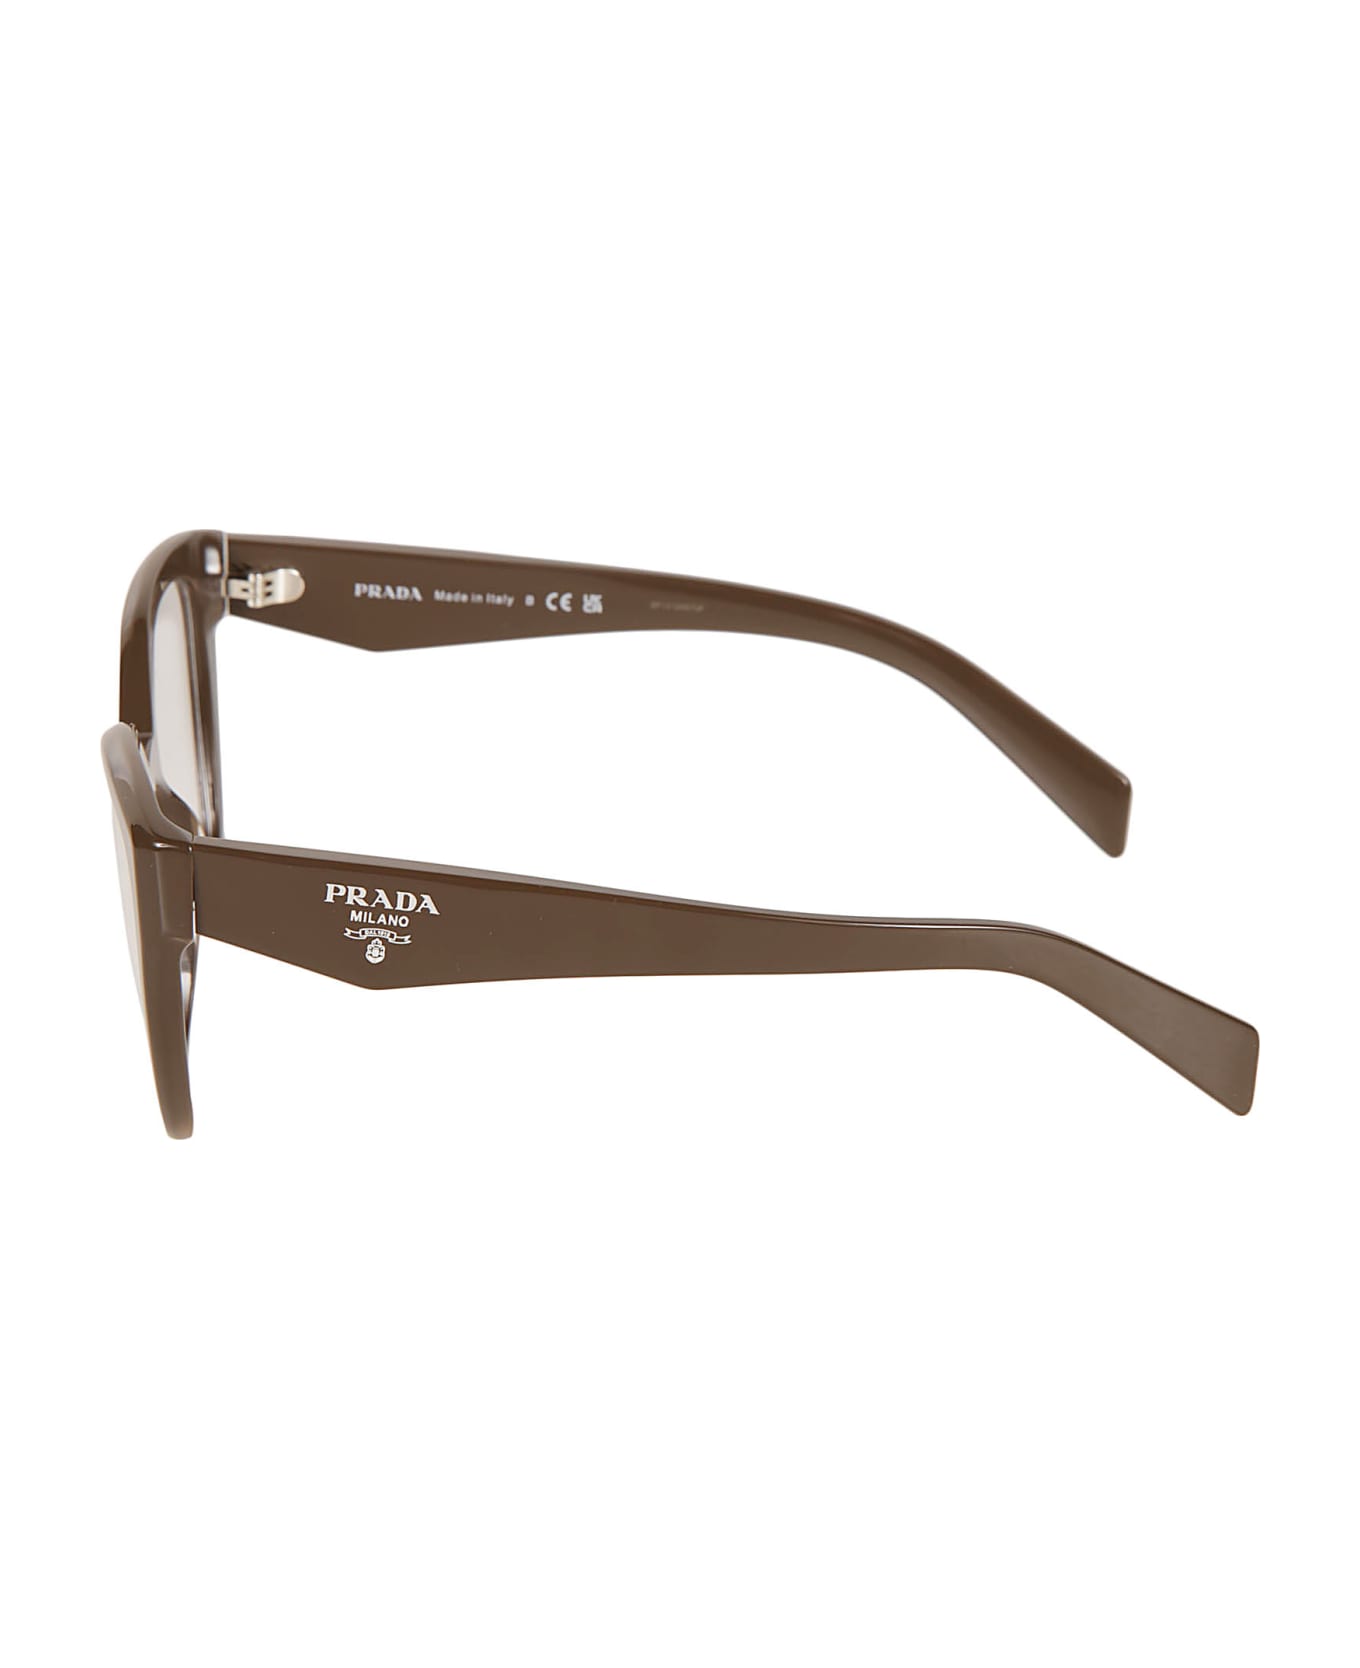 Prada Eyewear Vista Frame - 15L1O1